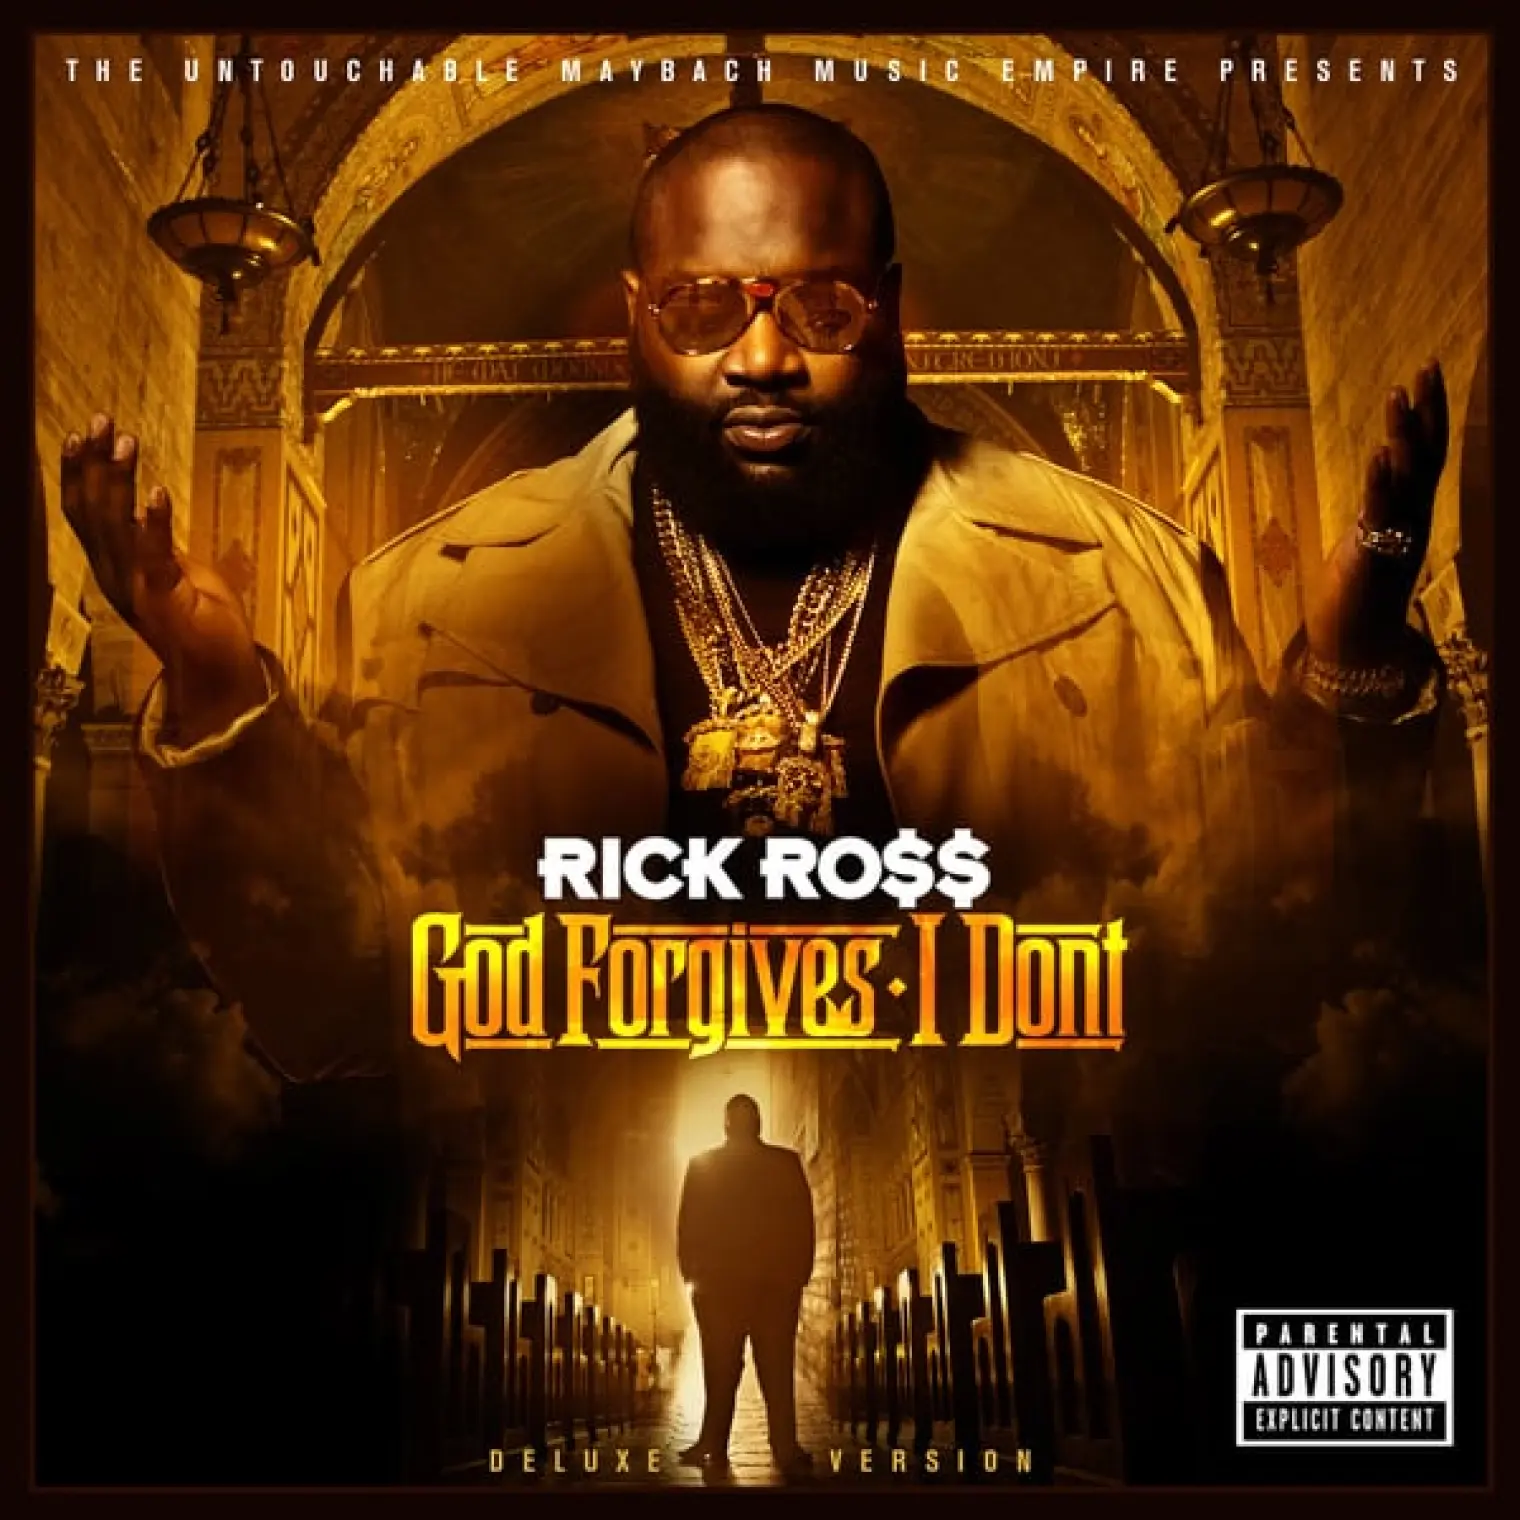 God Forgives, I Don't -  Rick Ross 